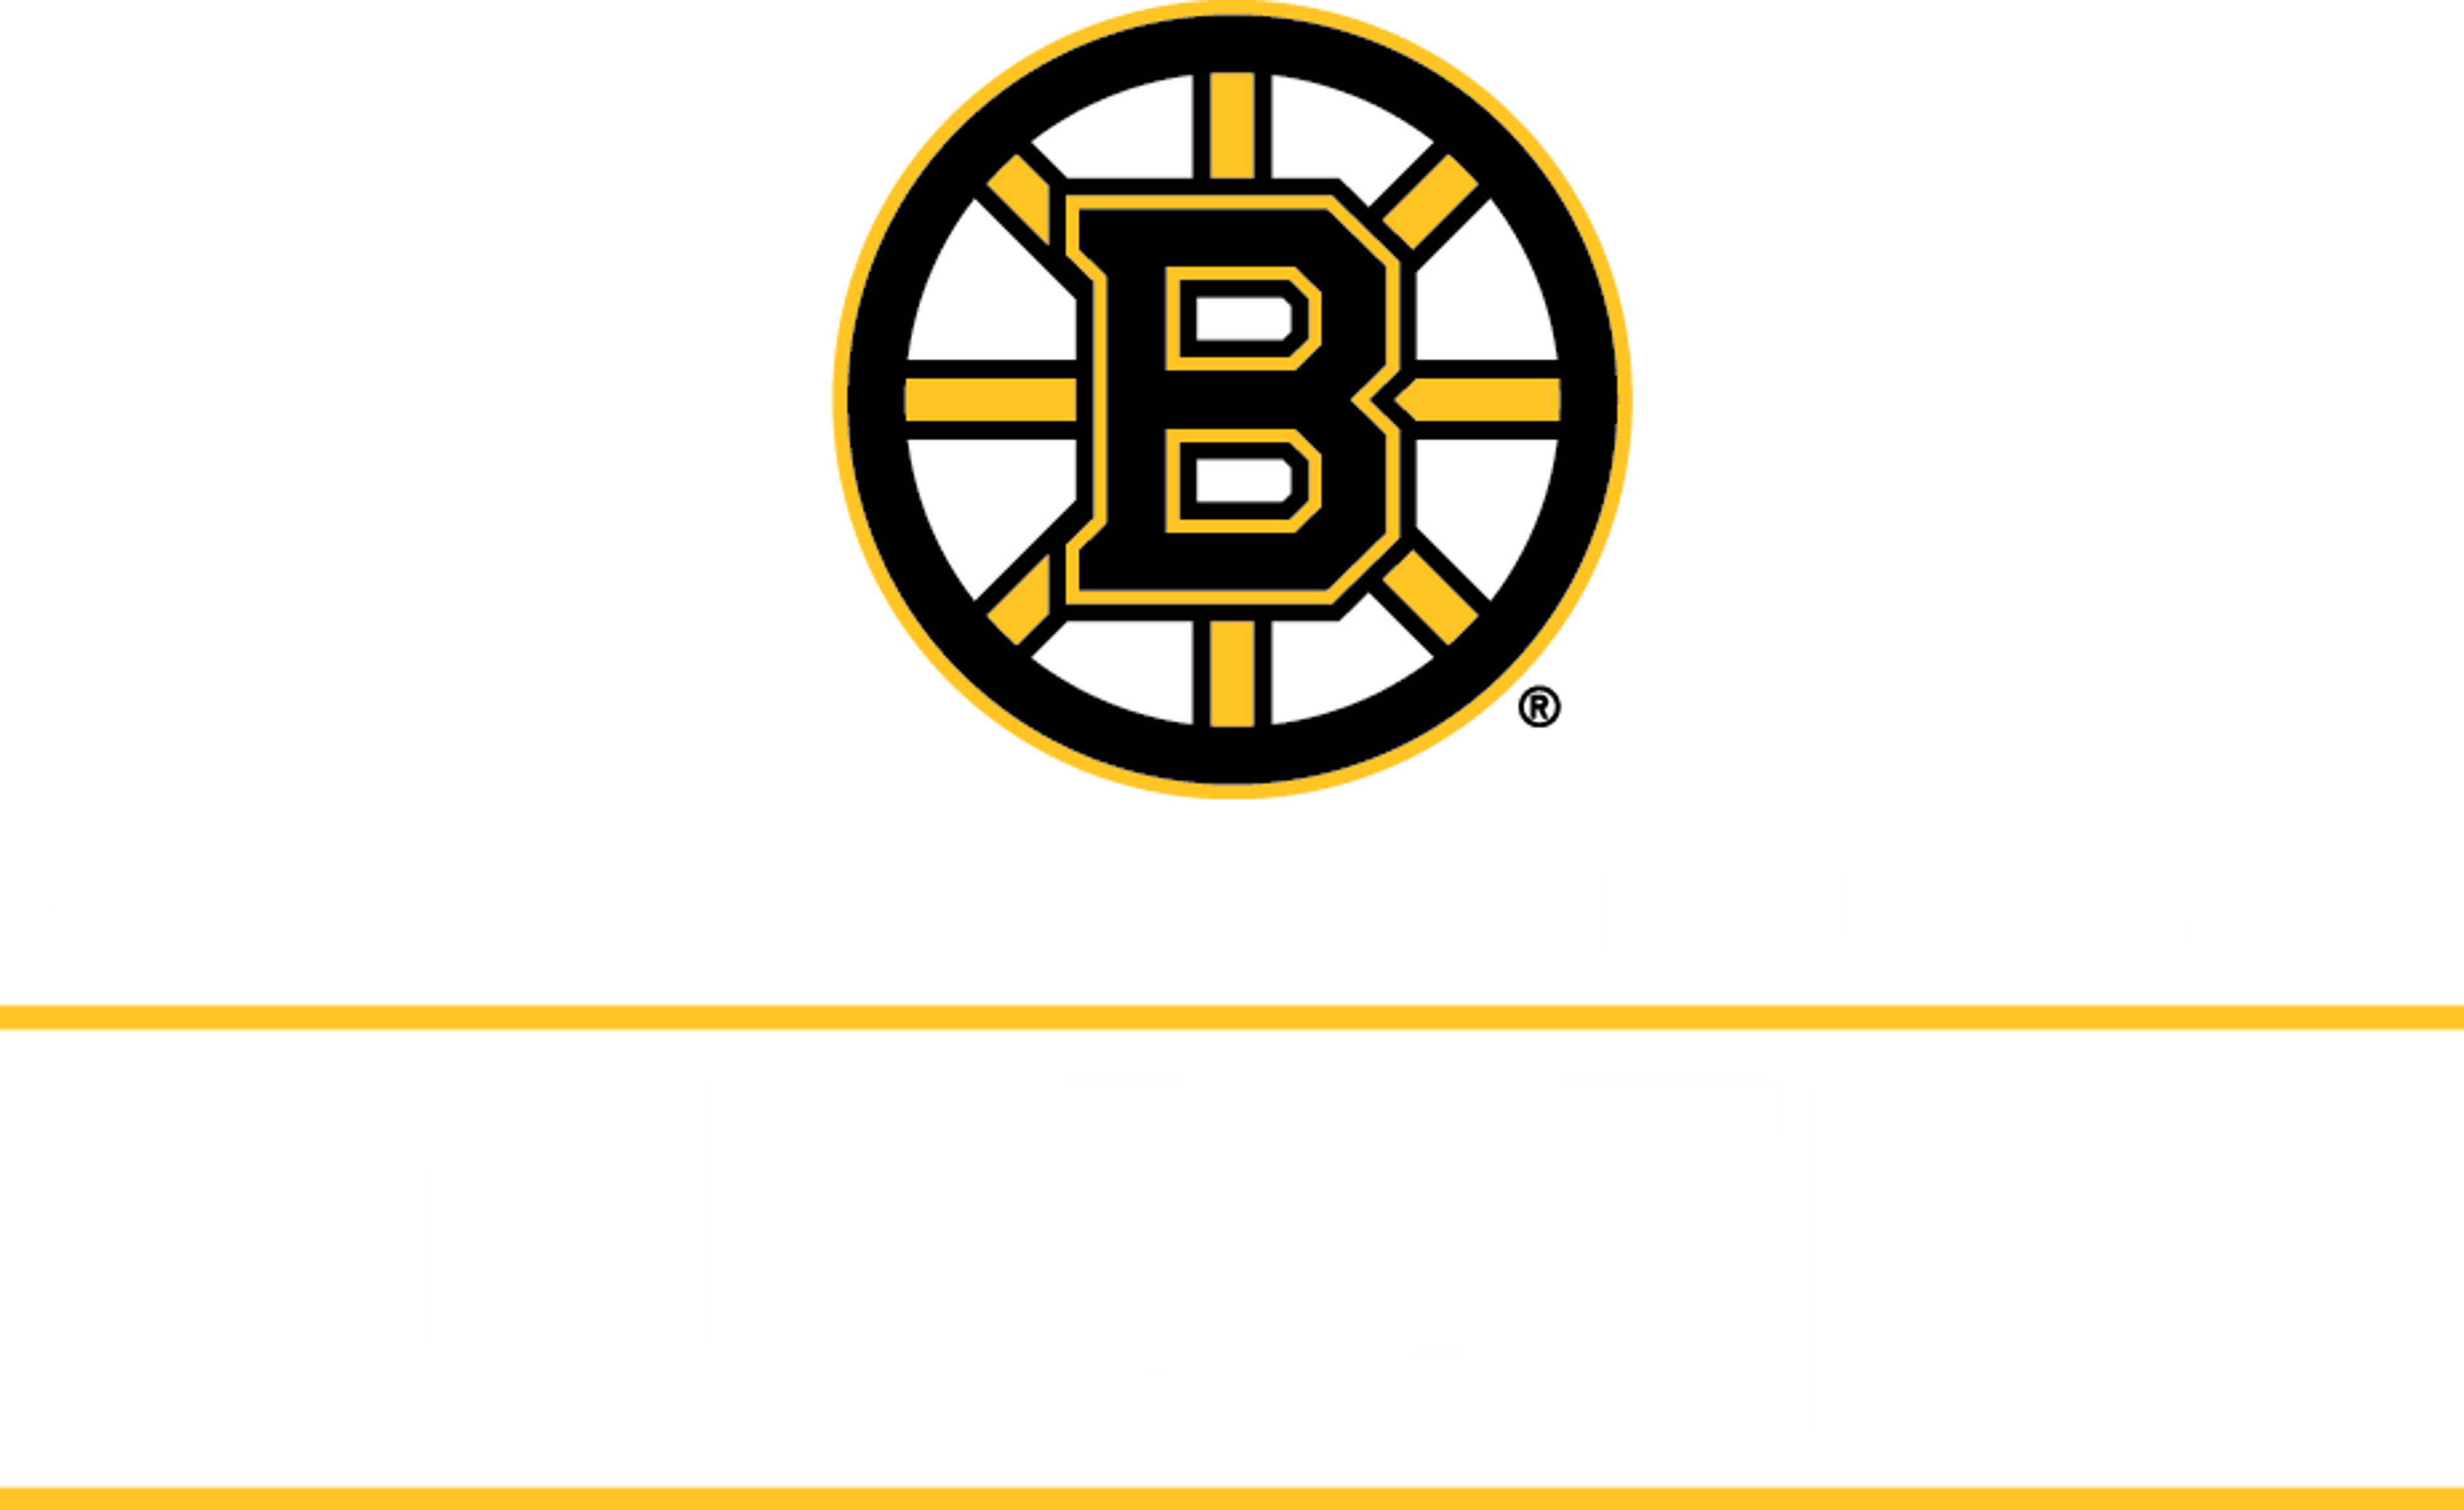 Lewiston Strong Fund logo image